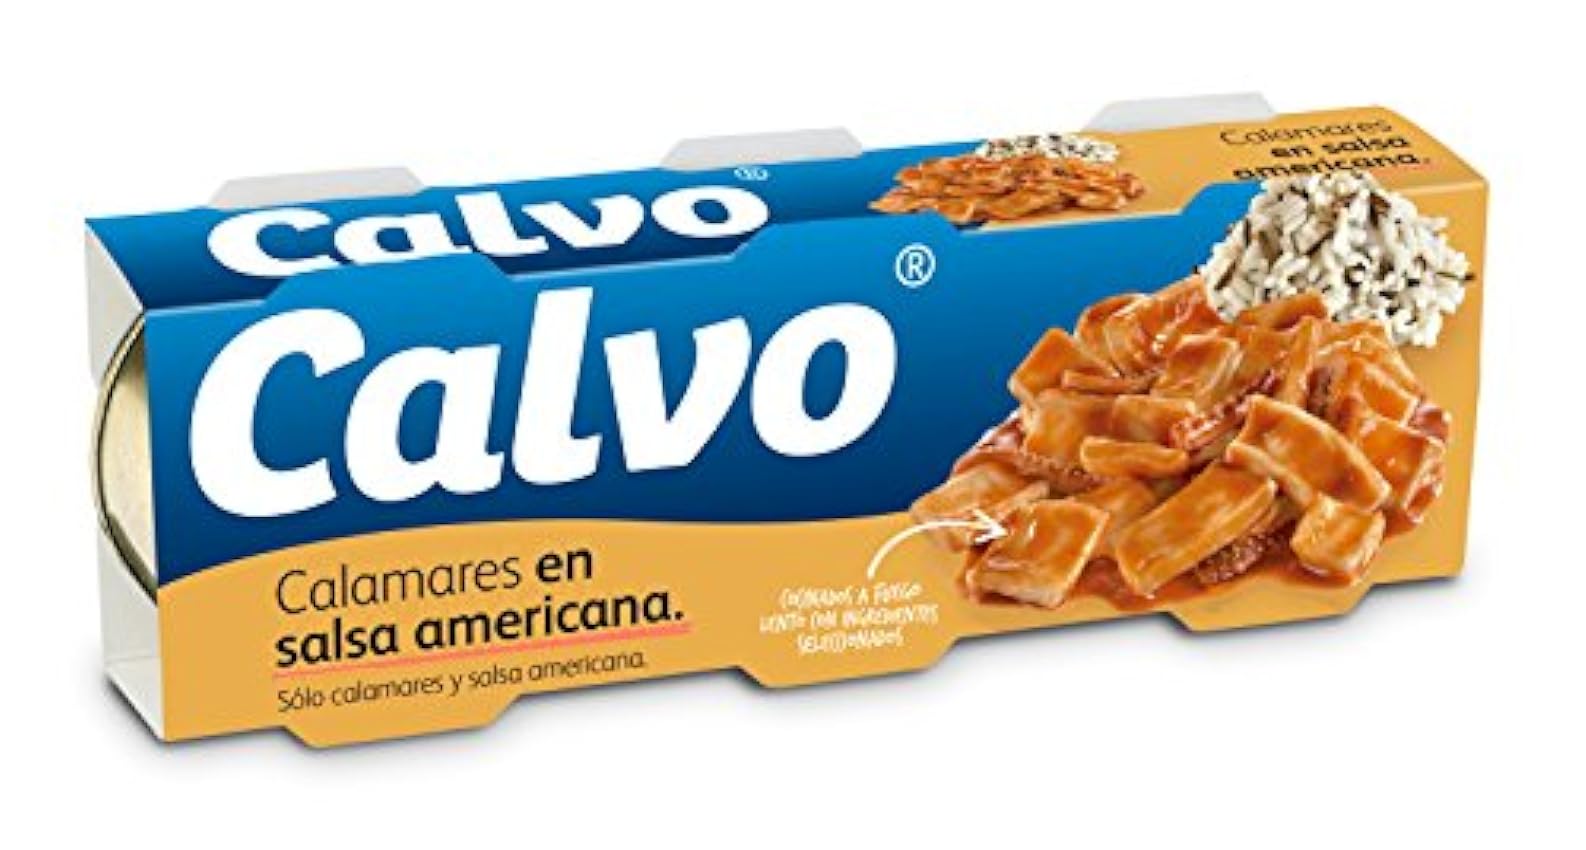 Calvo Atún claro en aceite de Oliva Pack3+1 65g & Calamares en Salsa Americana Pack3 x 80g p6uMp4nE